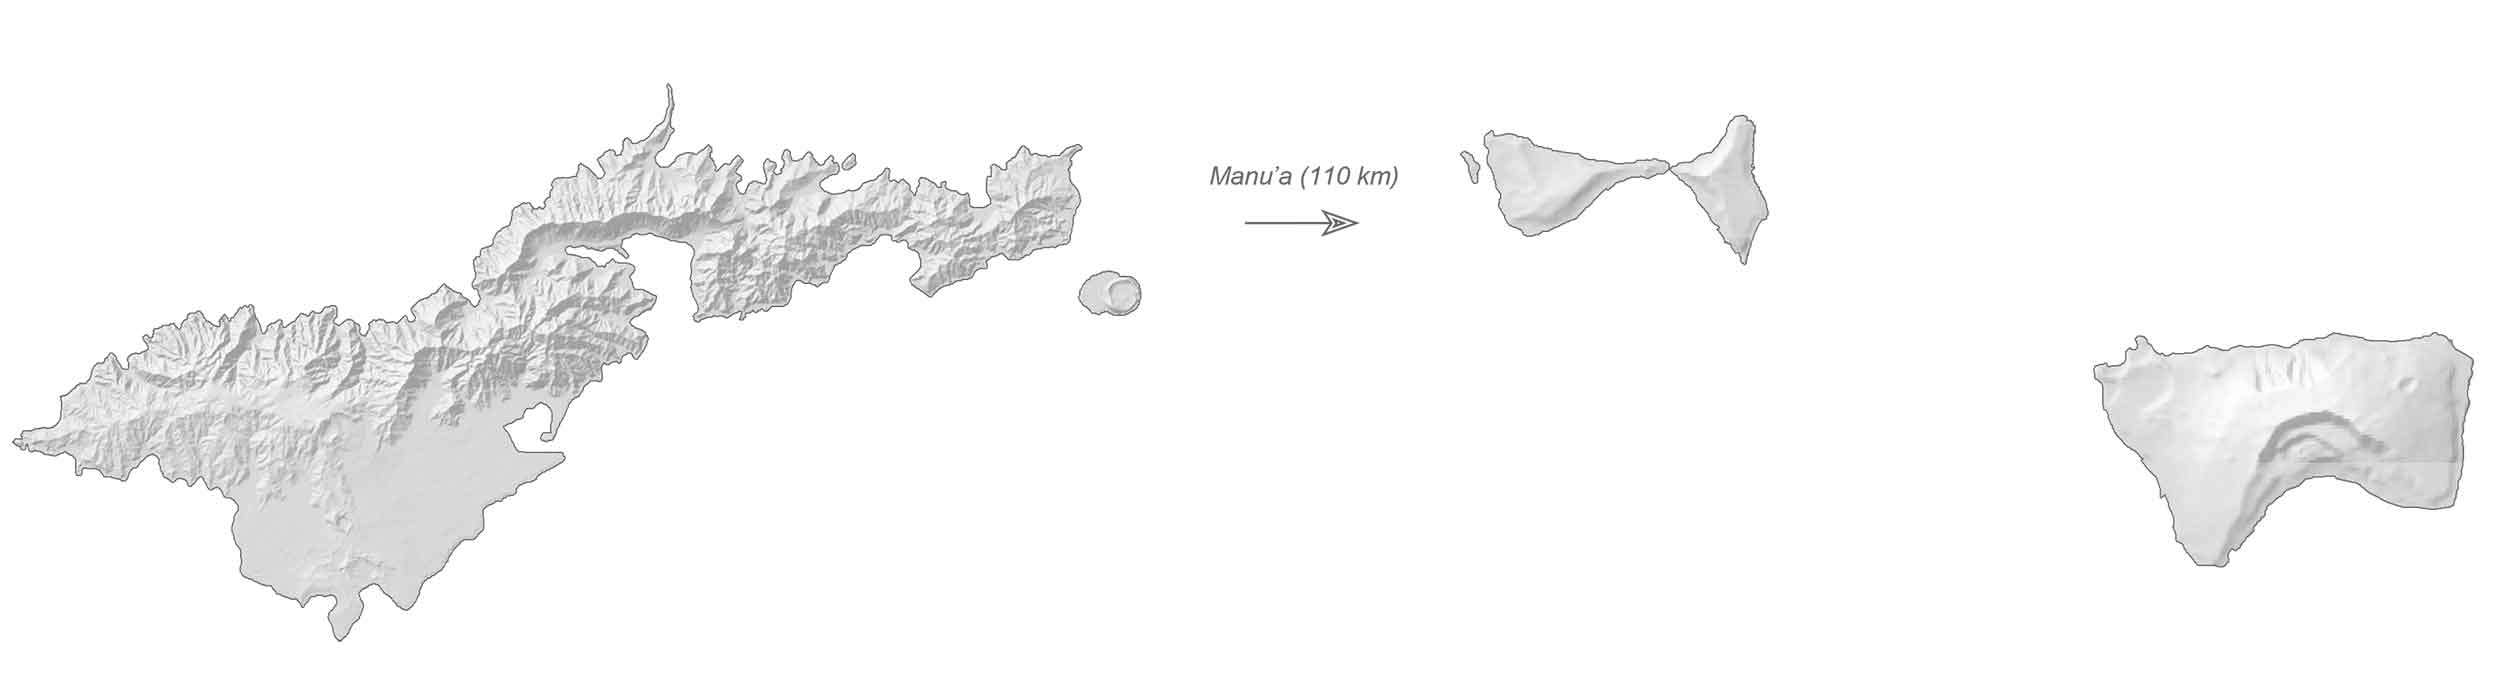 American Samoa Elevation Map